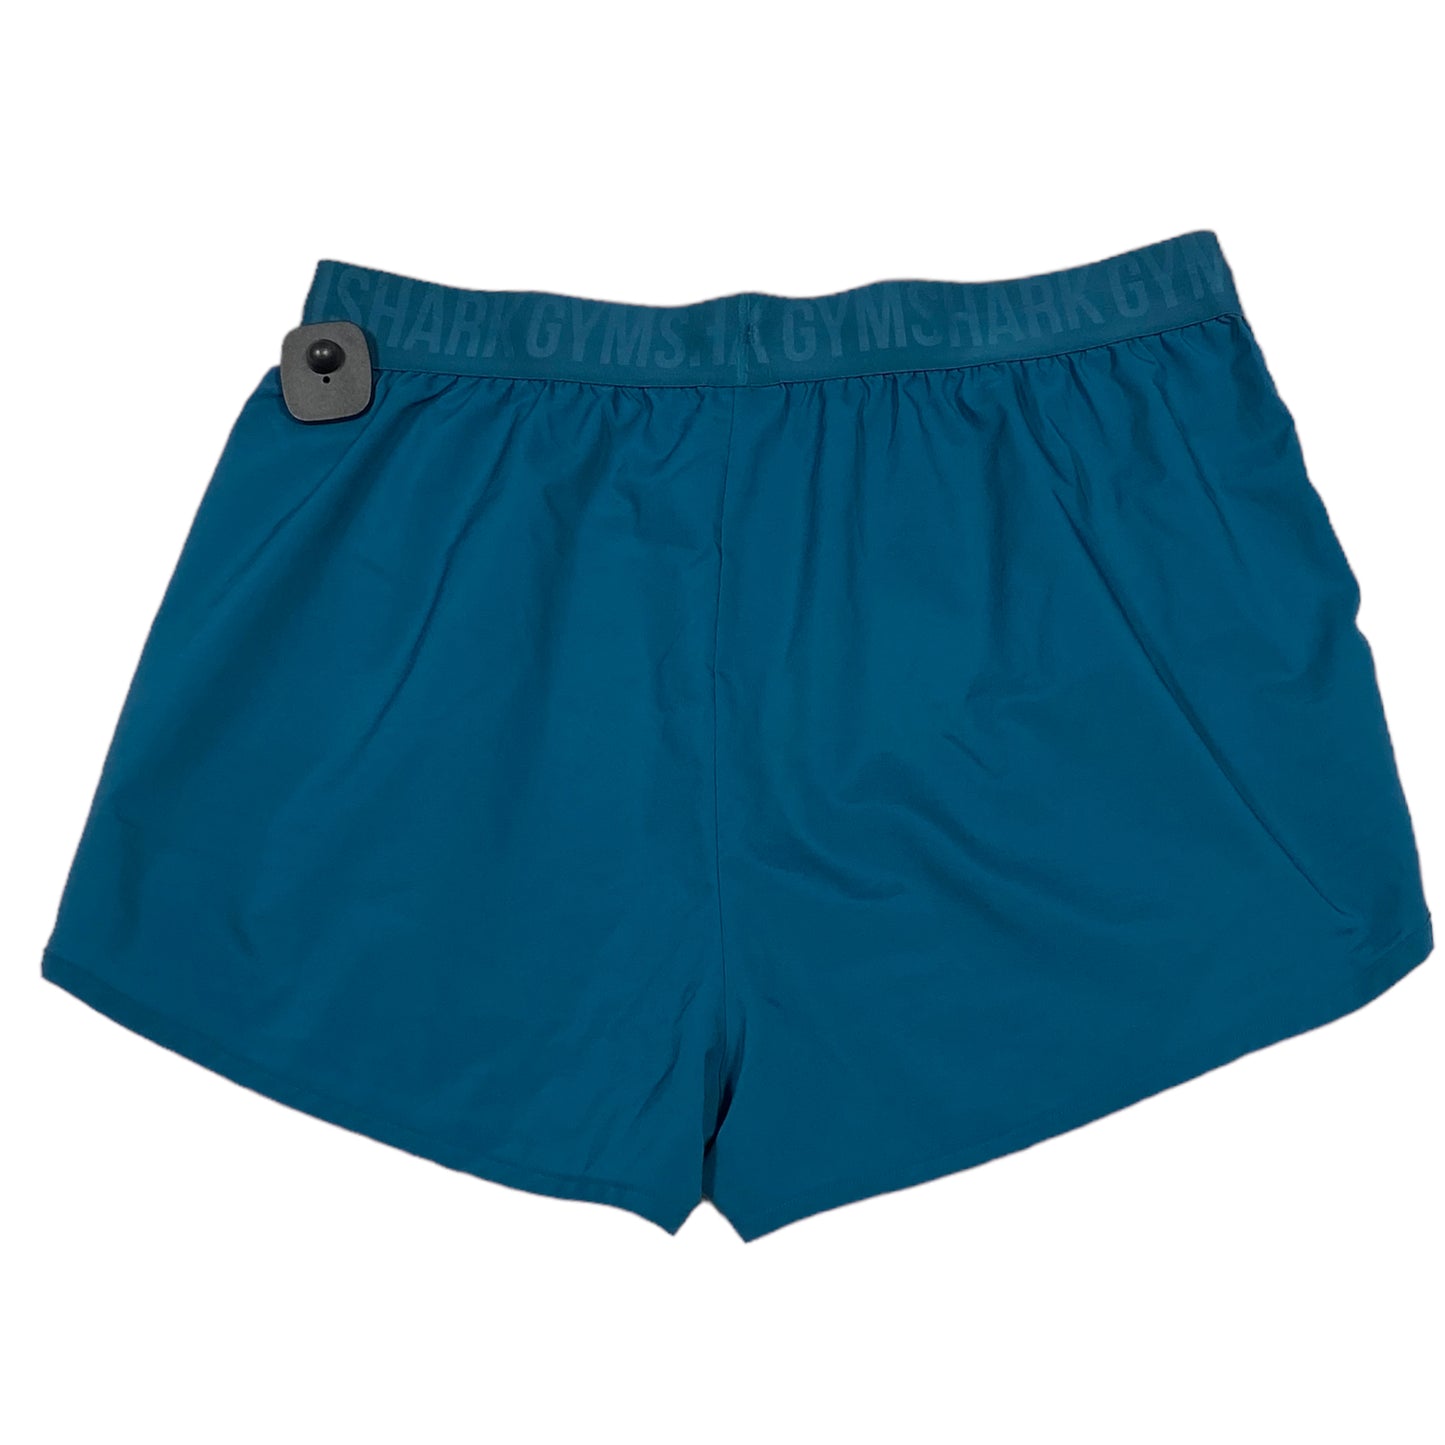 Athletic Shorts By Gym Shark  Size: Xxl